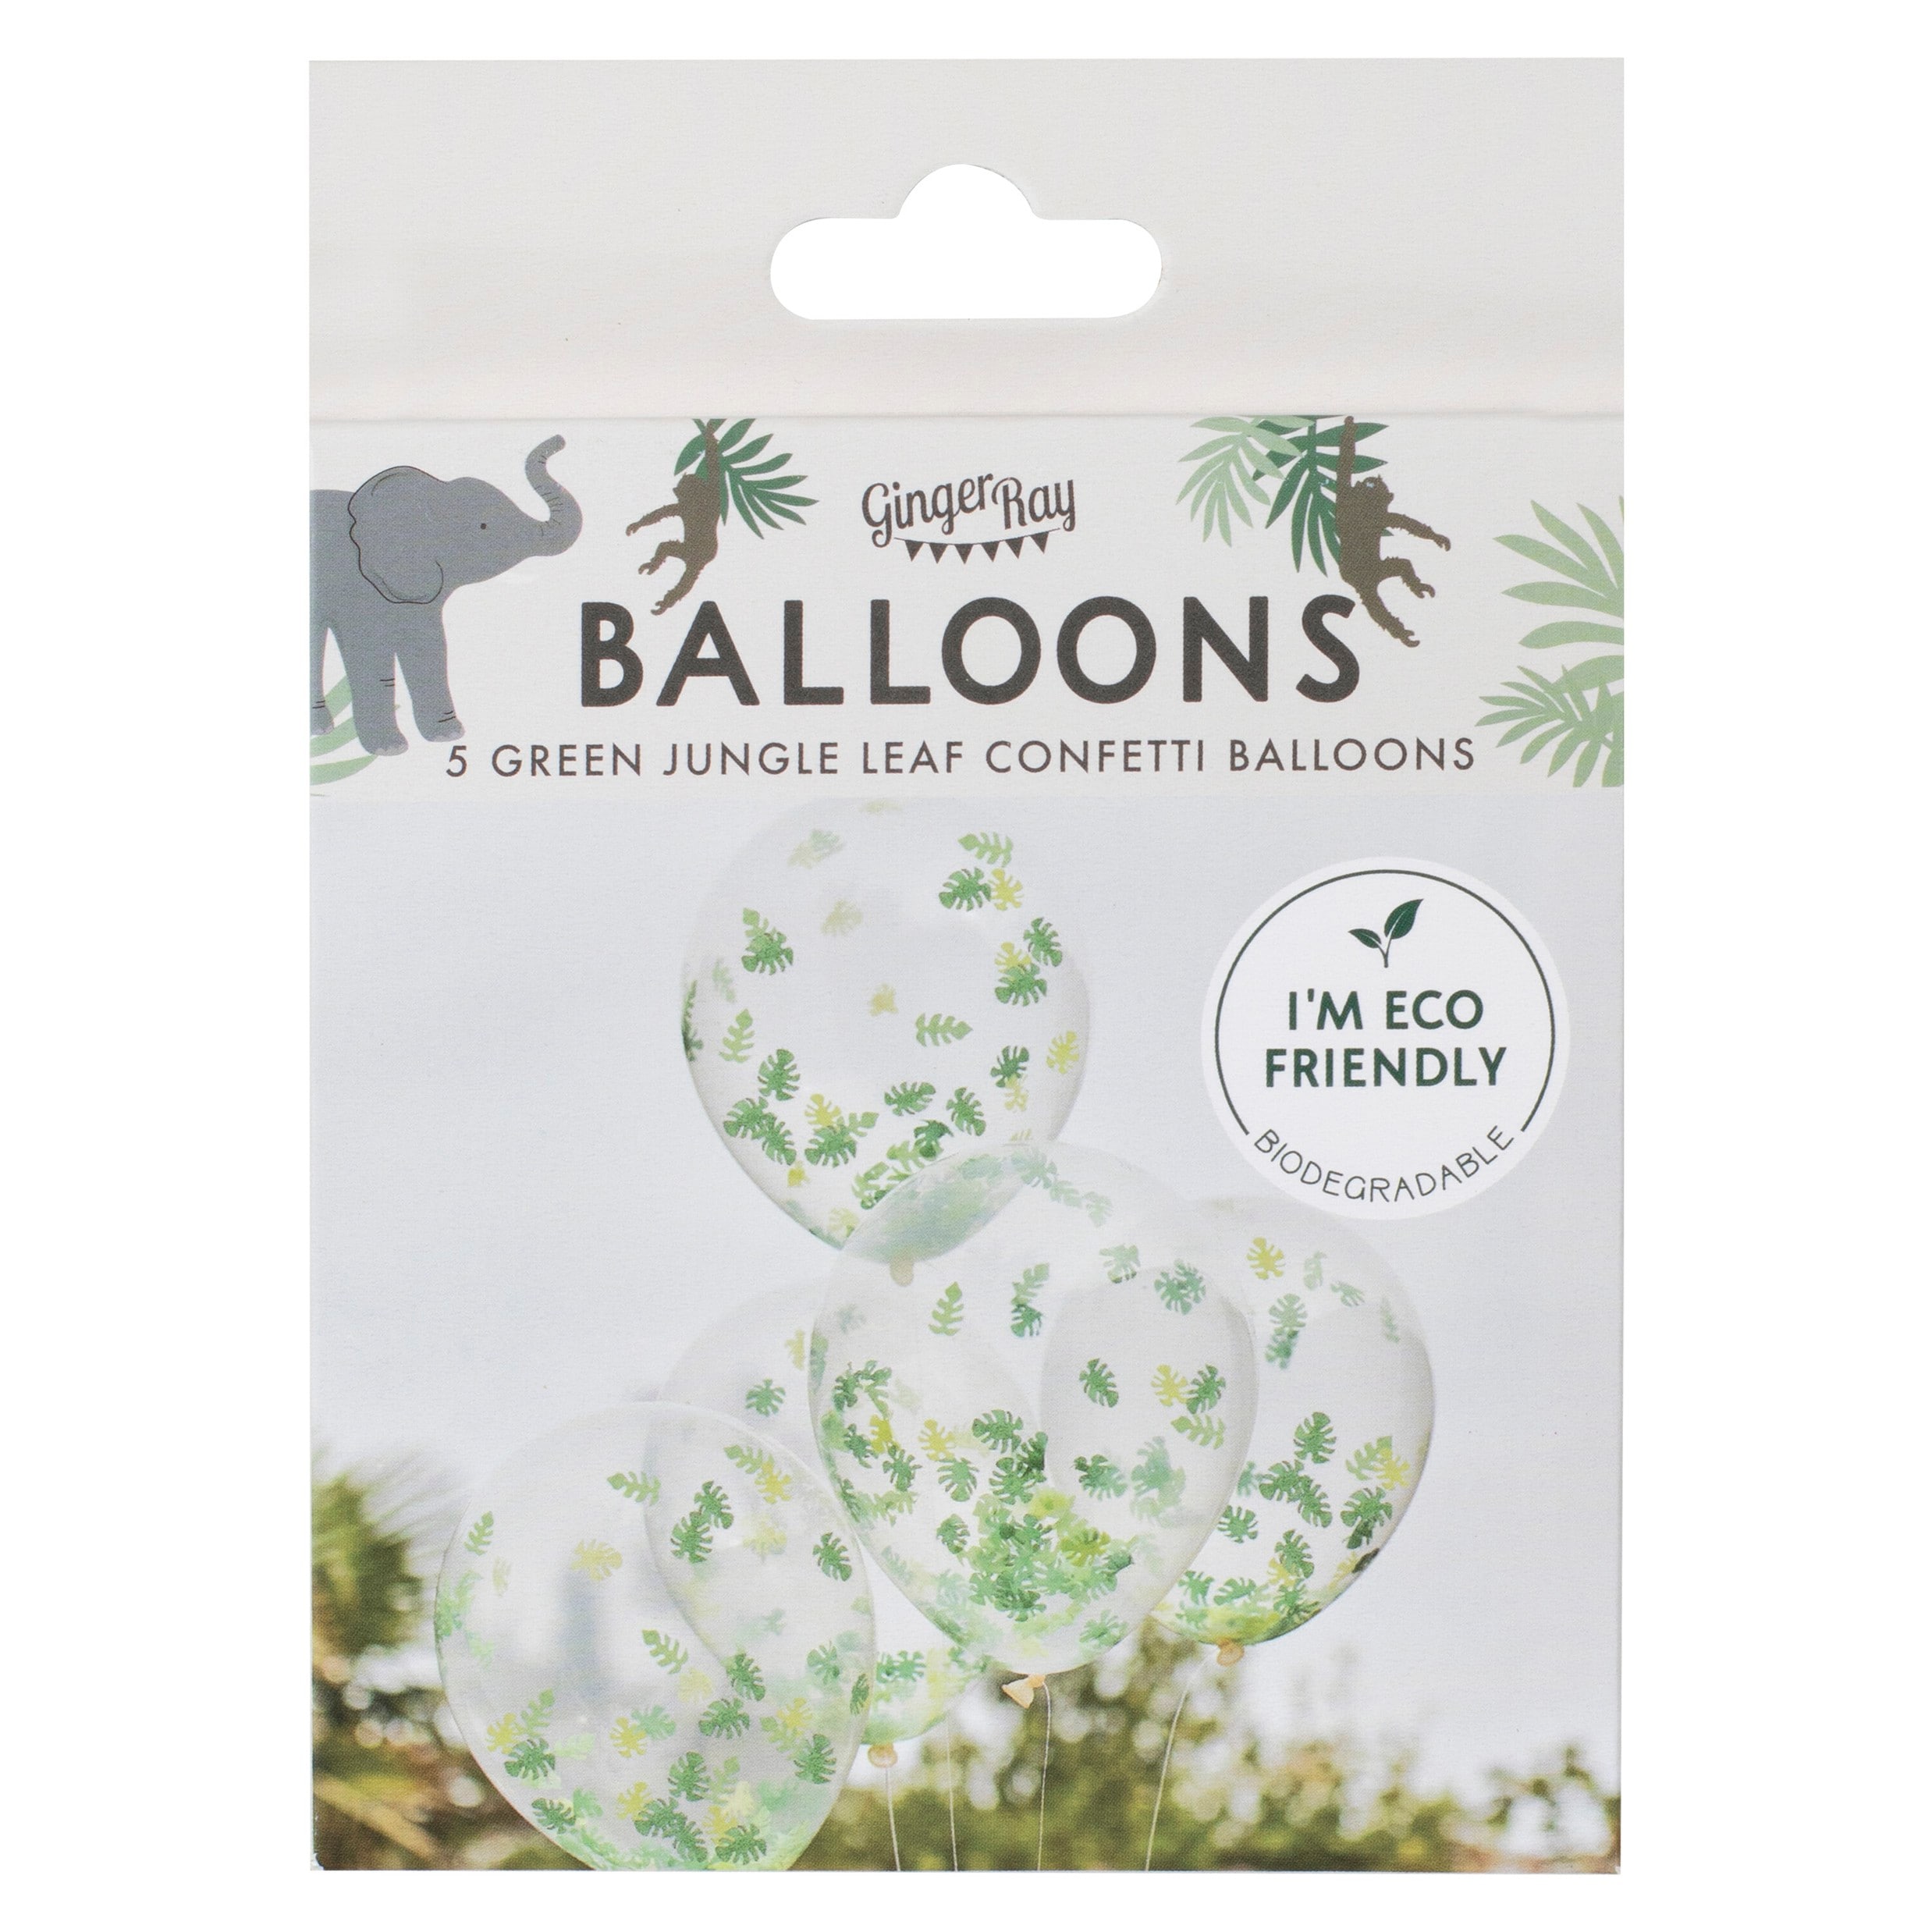 Let's Go Wild - Luftballons mit Blattkonfetti 5er Pack